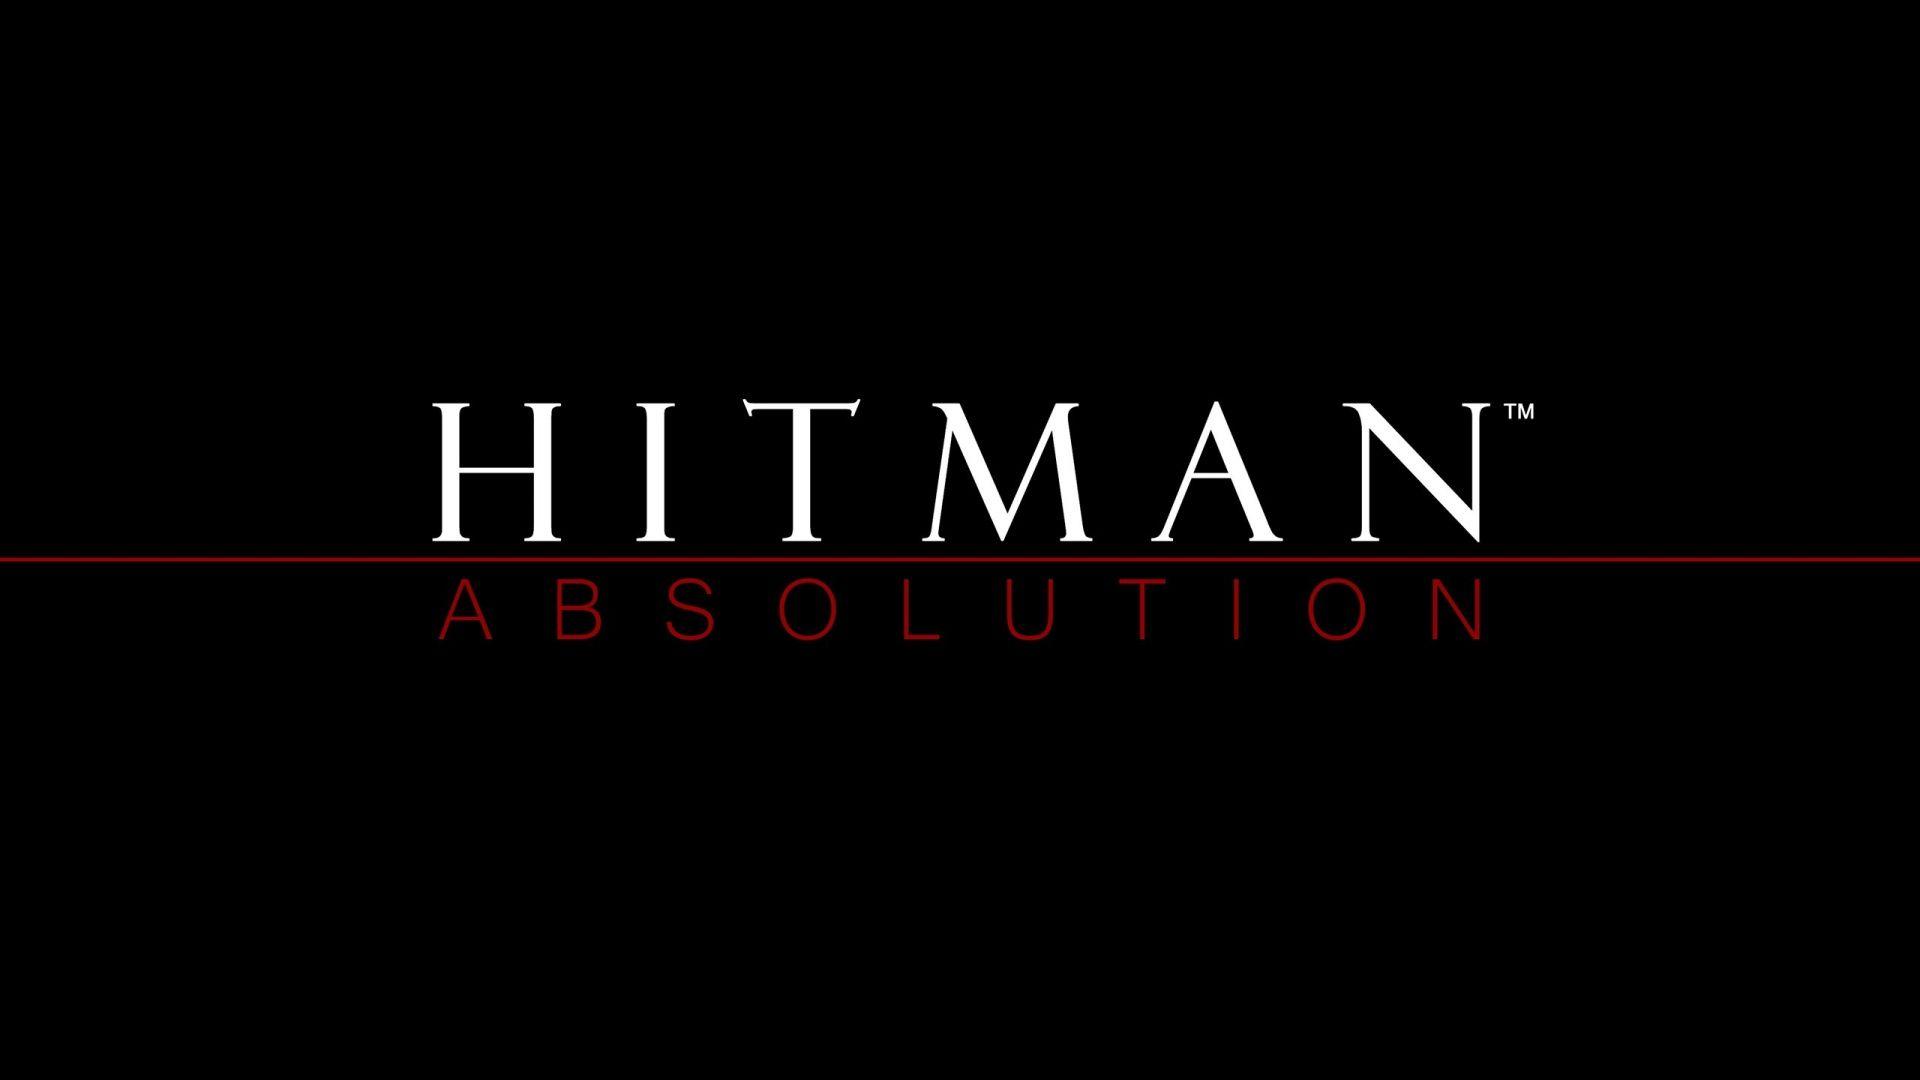 Hitman: Absolution desktop PC and Mac wallpaper